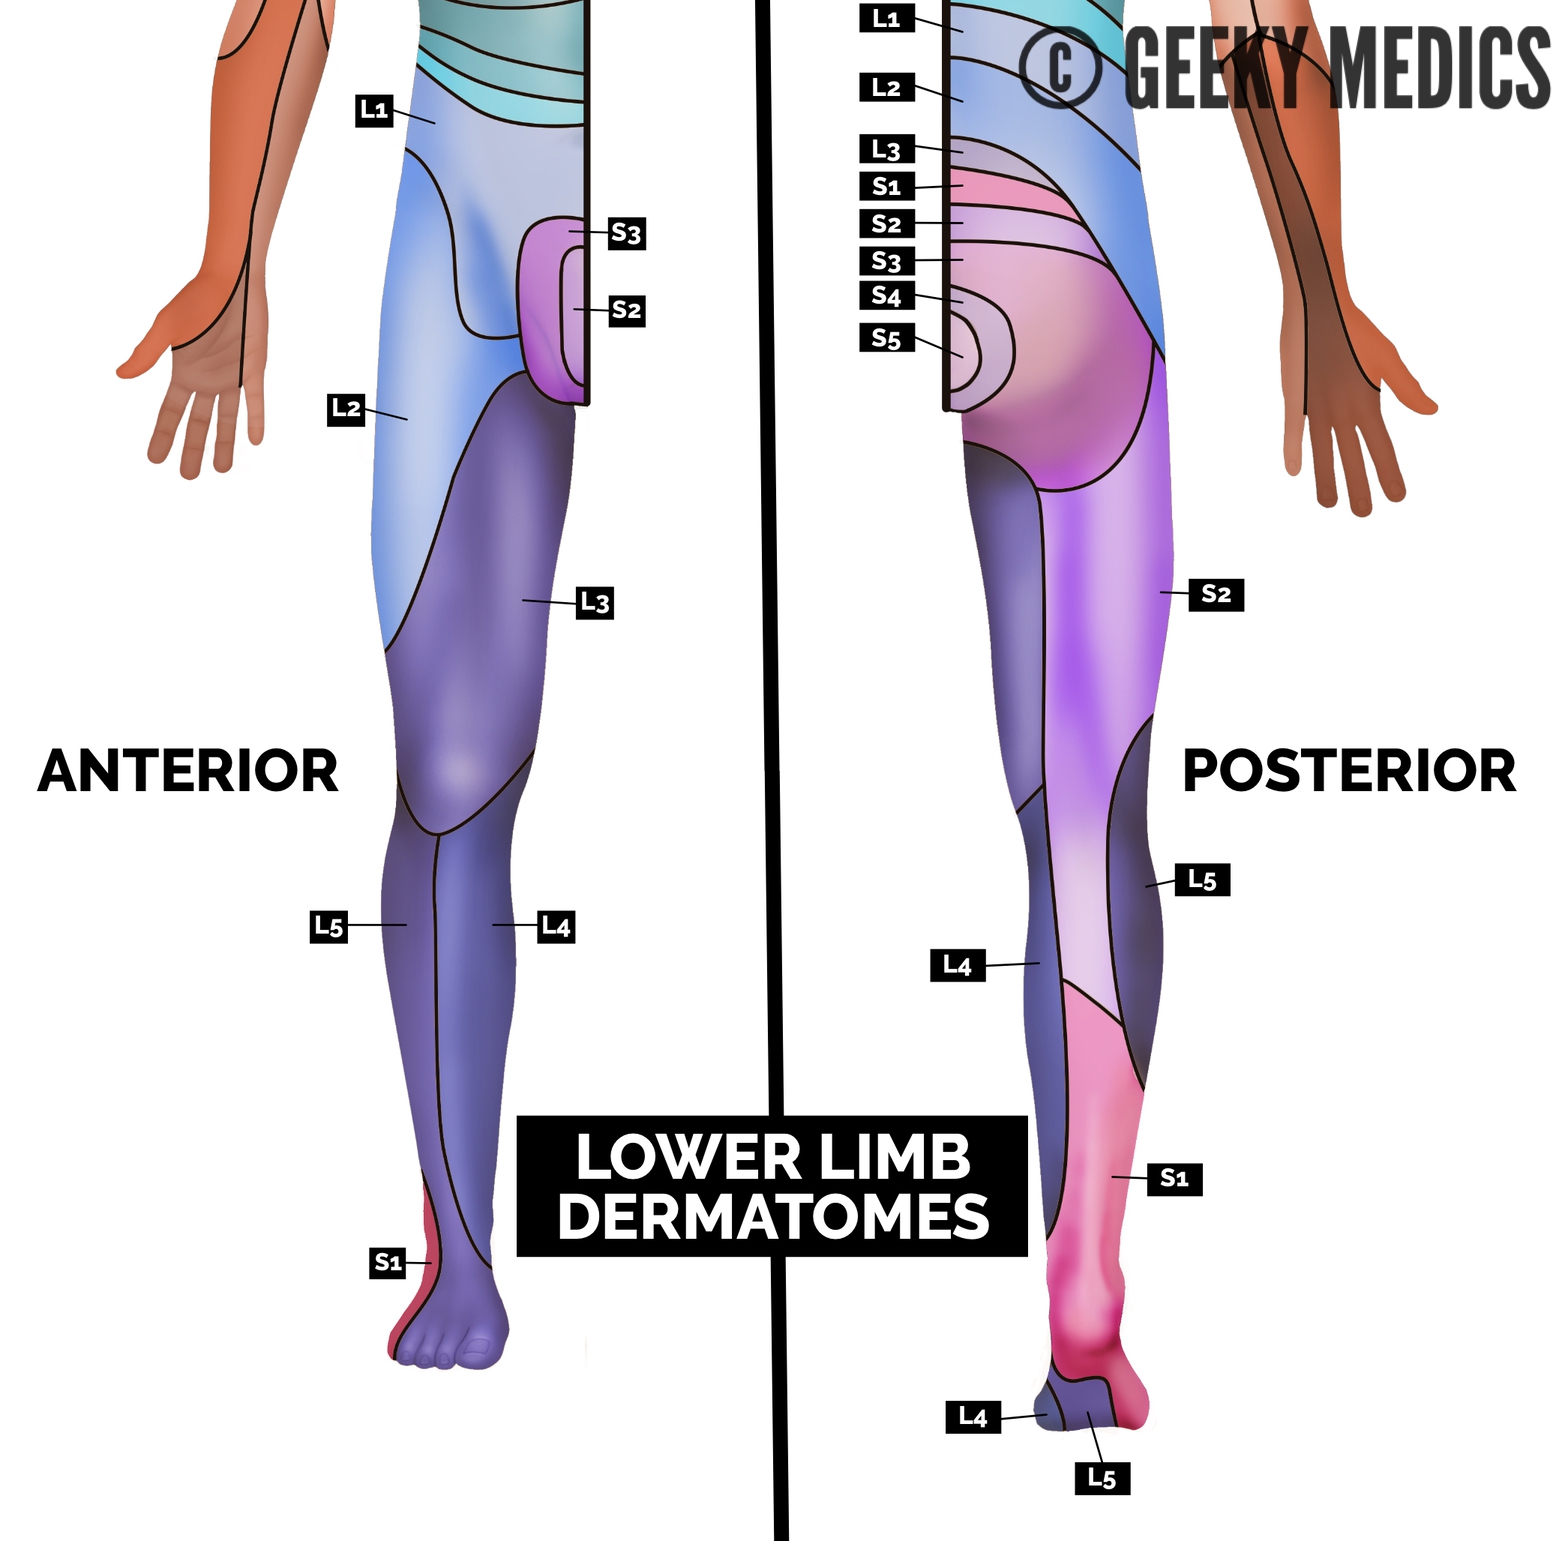 Lower limb dermatome map